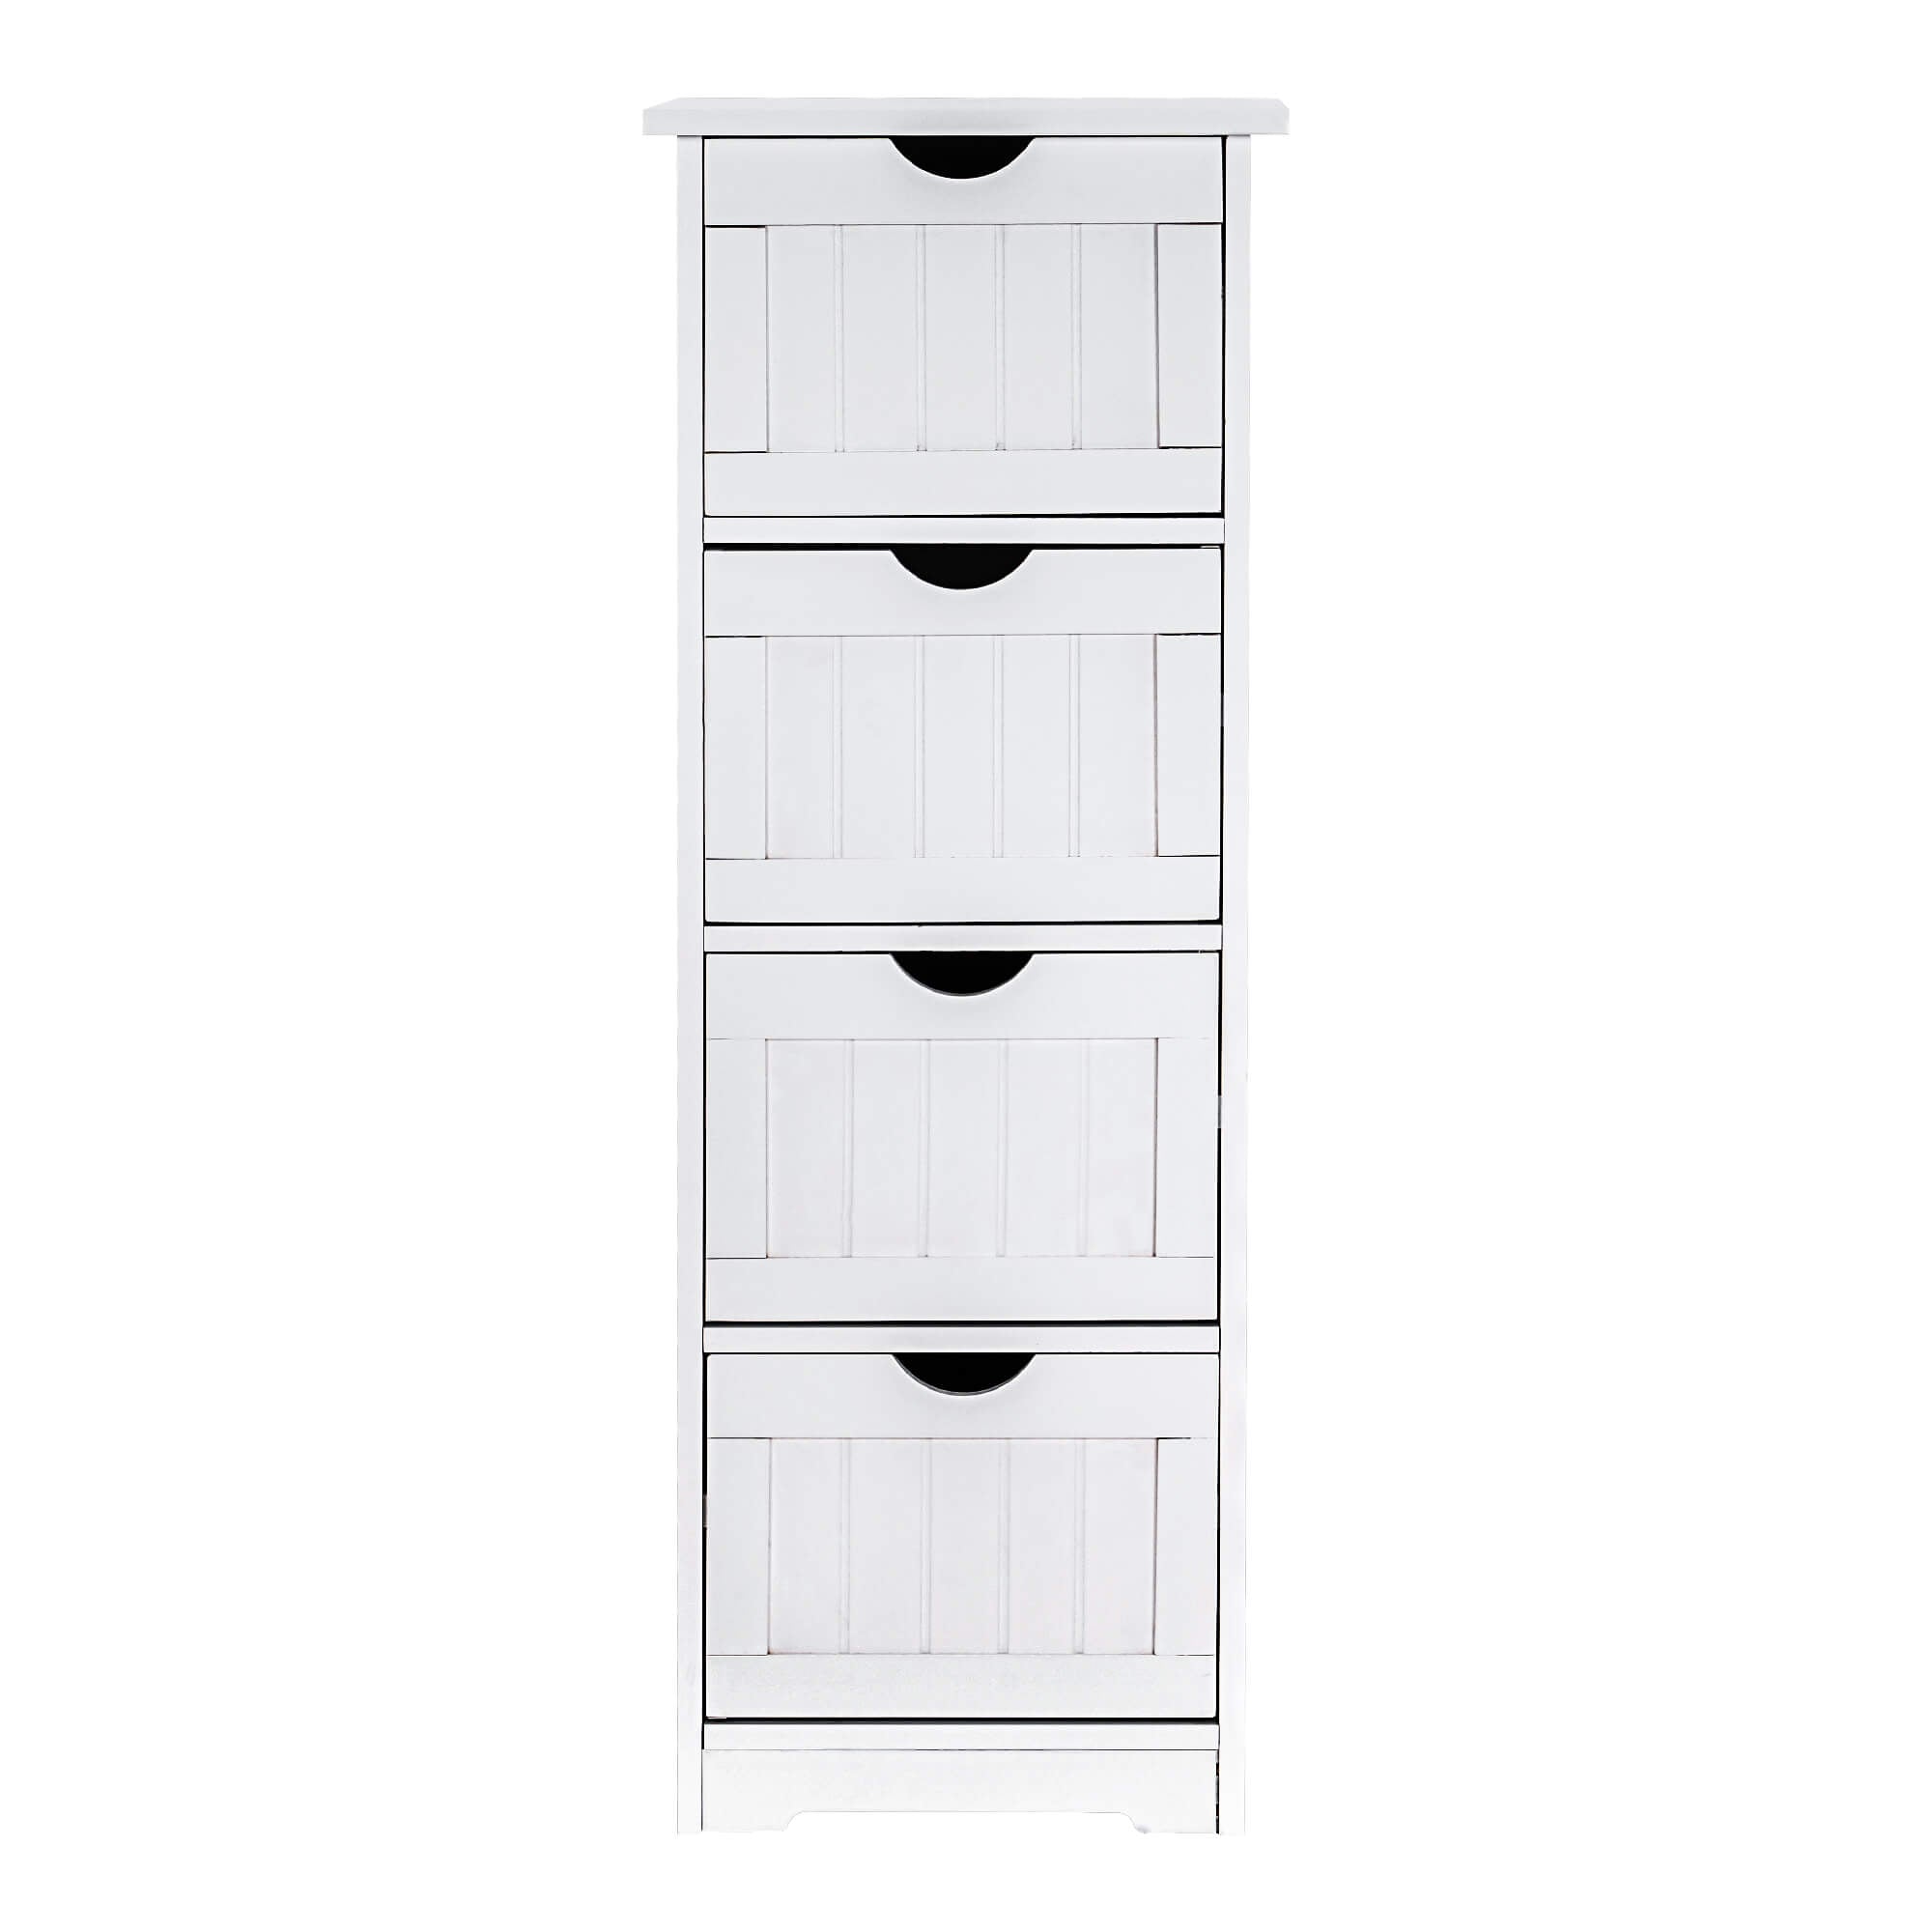 Ivinta Free Standing Bathroom Storage Cabinet with Shutter Doors